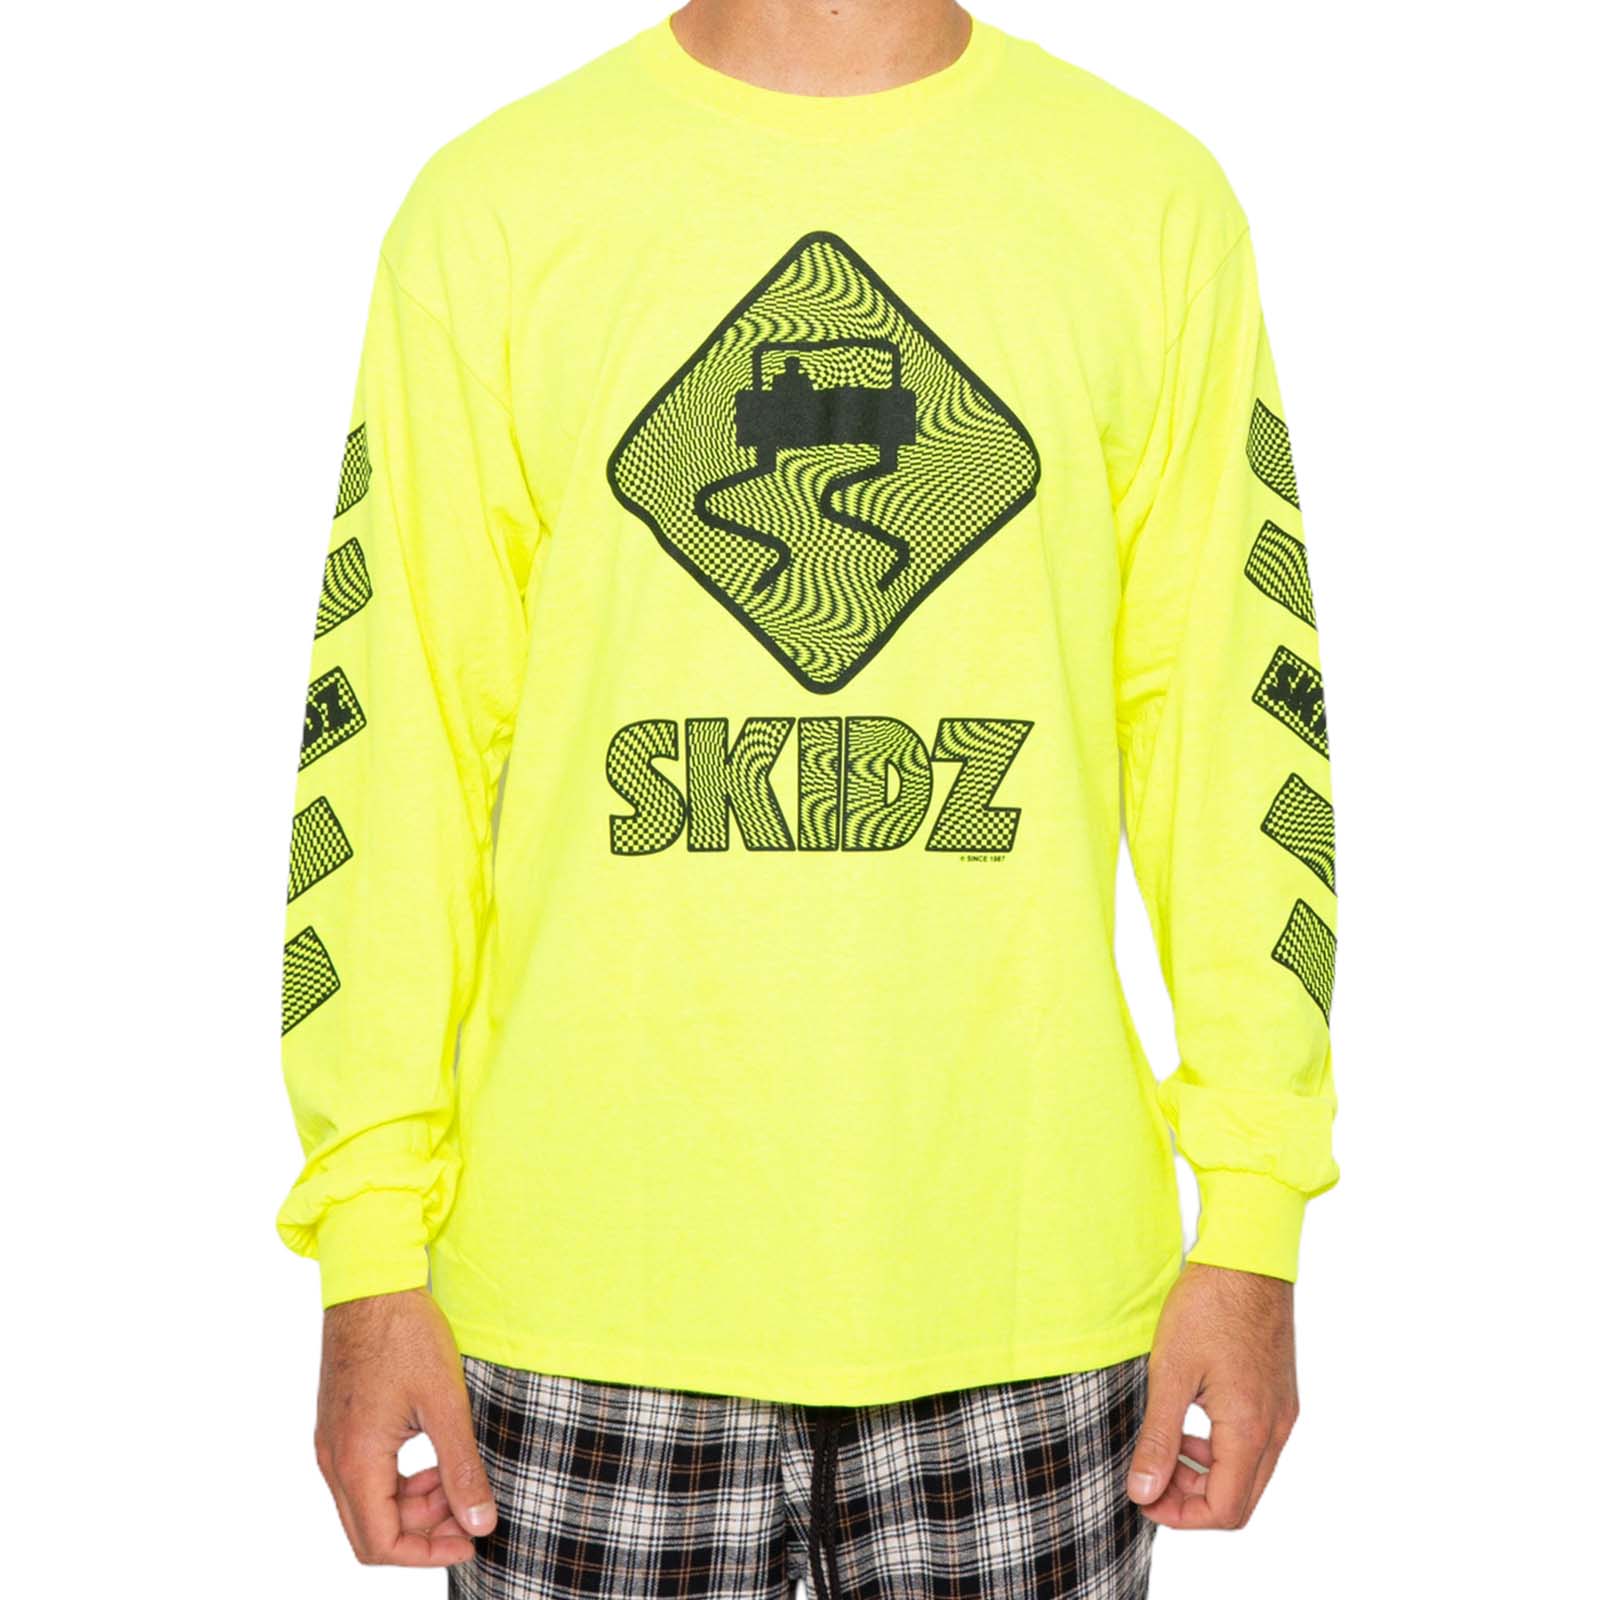 Skidz T-SHIRTS Trippy Check Long Sleeve Tee - Neon Yellow